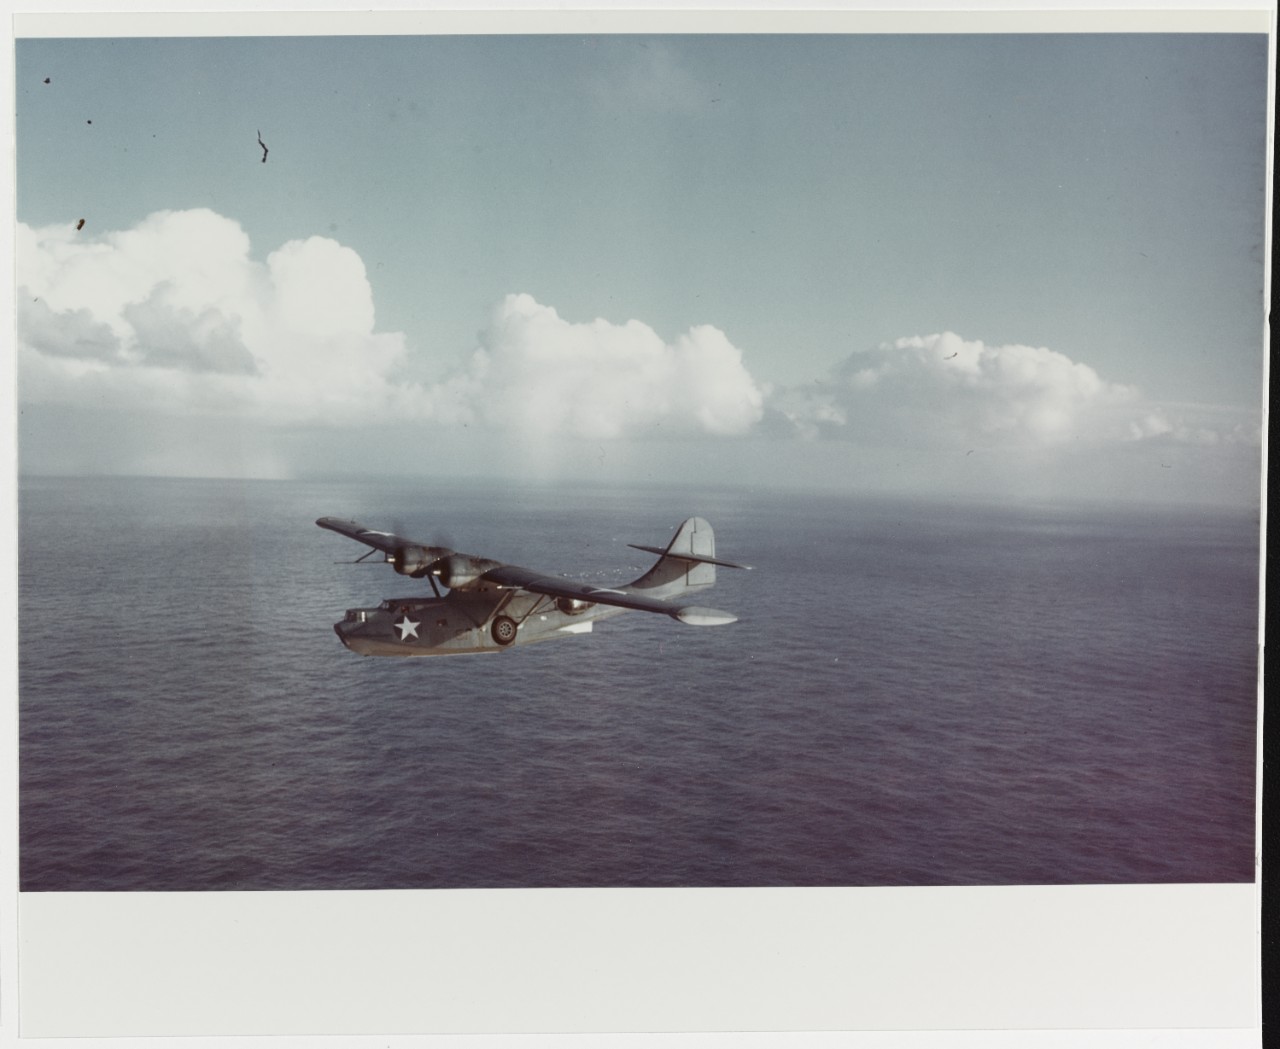 Consolidated PBY -3 CATALINA patrol bomber